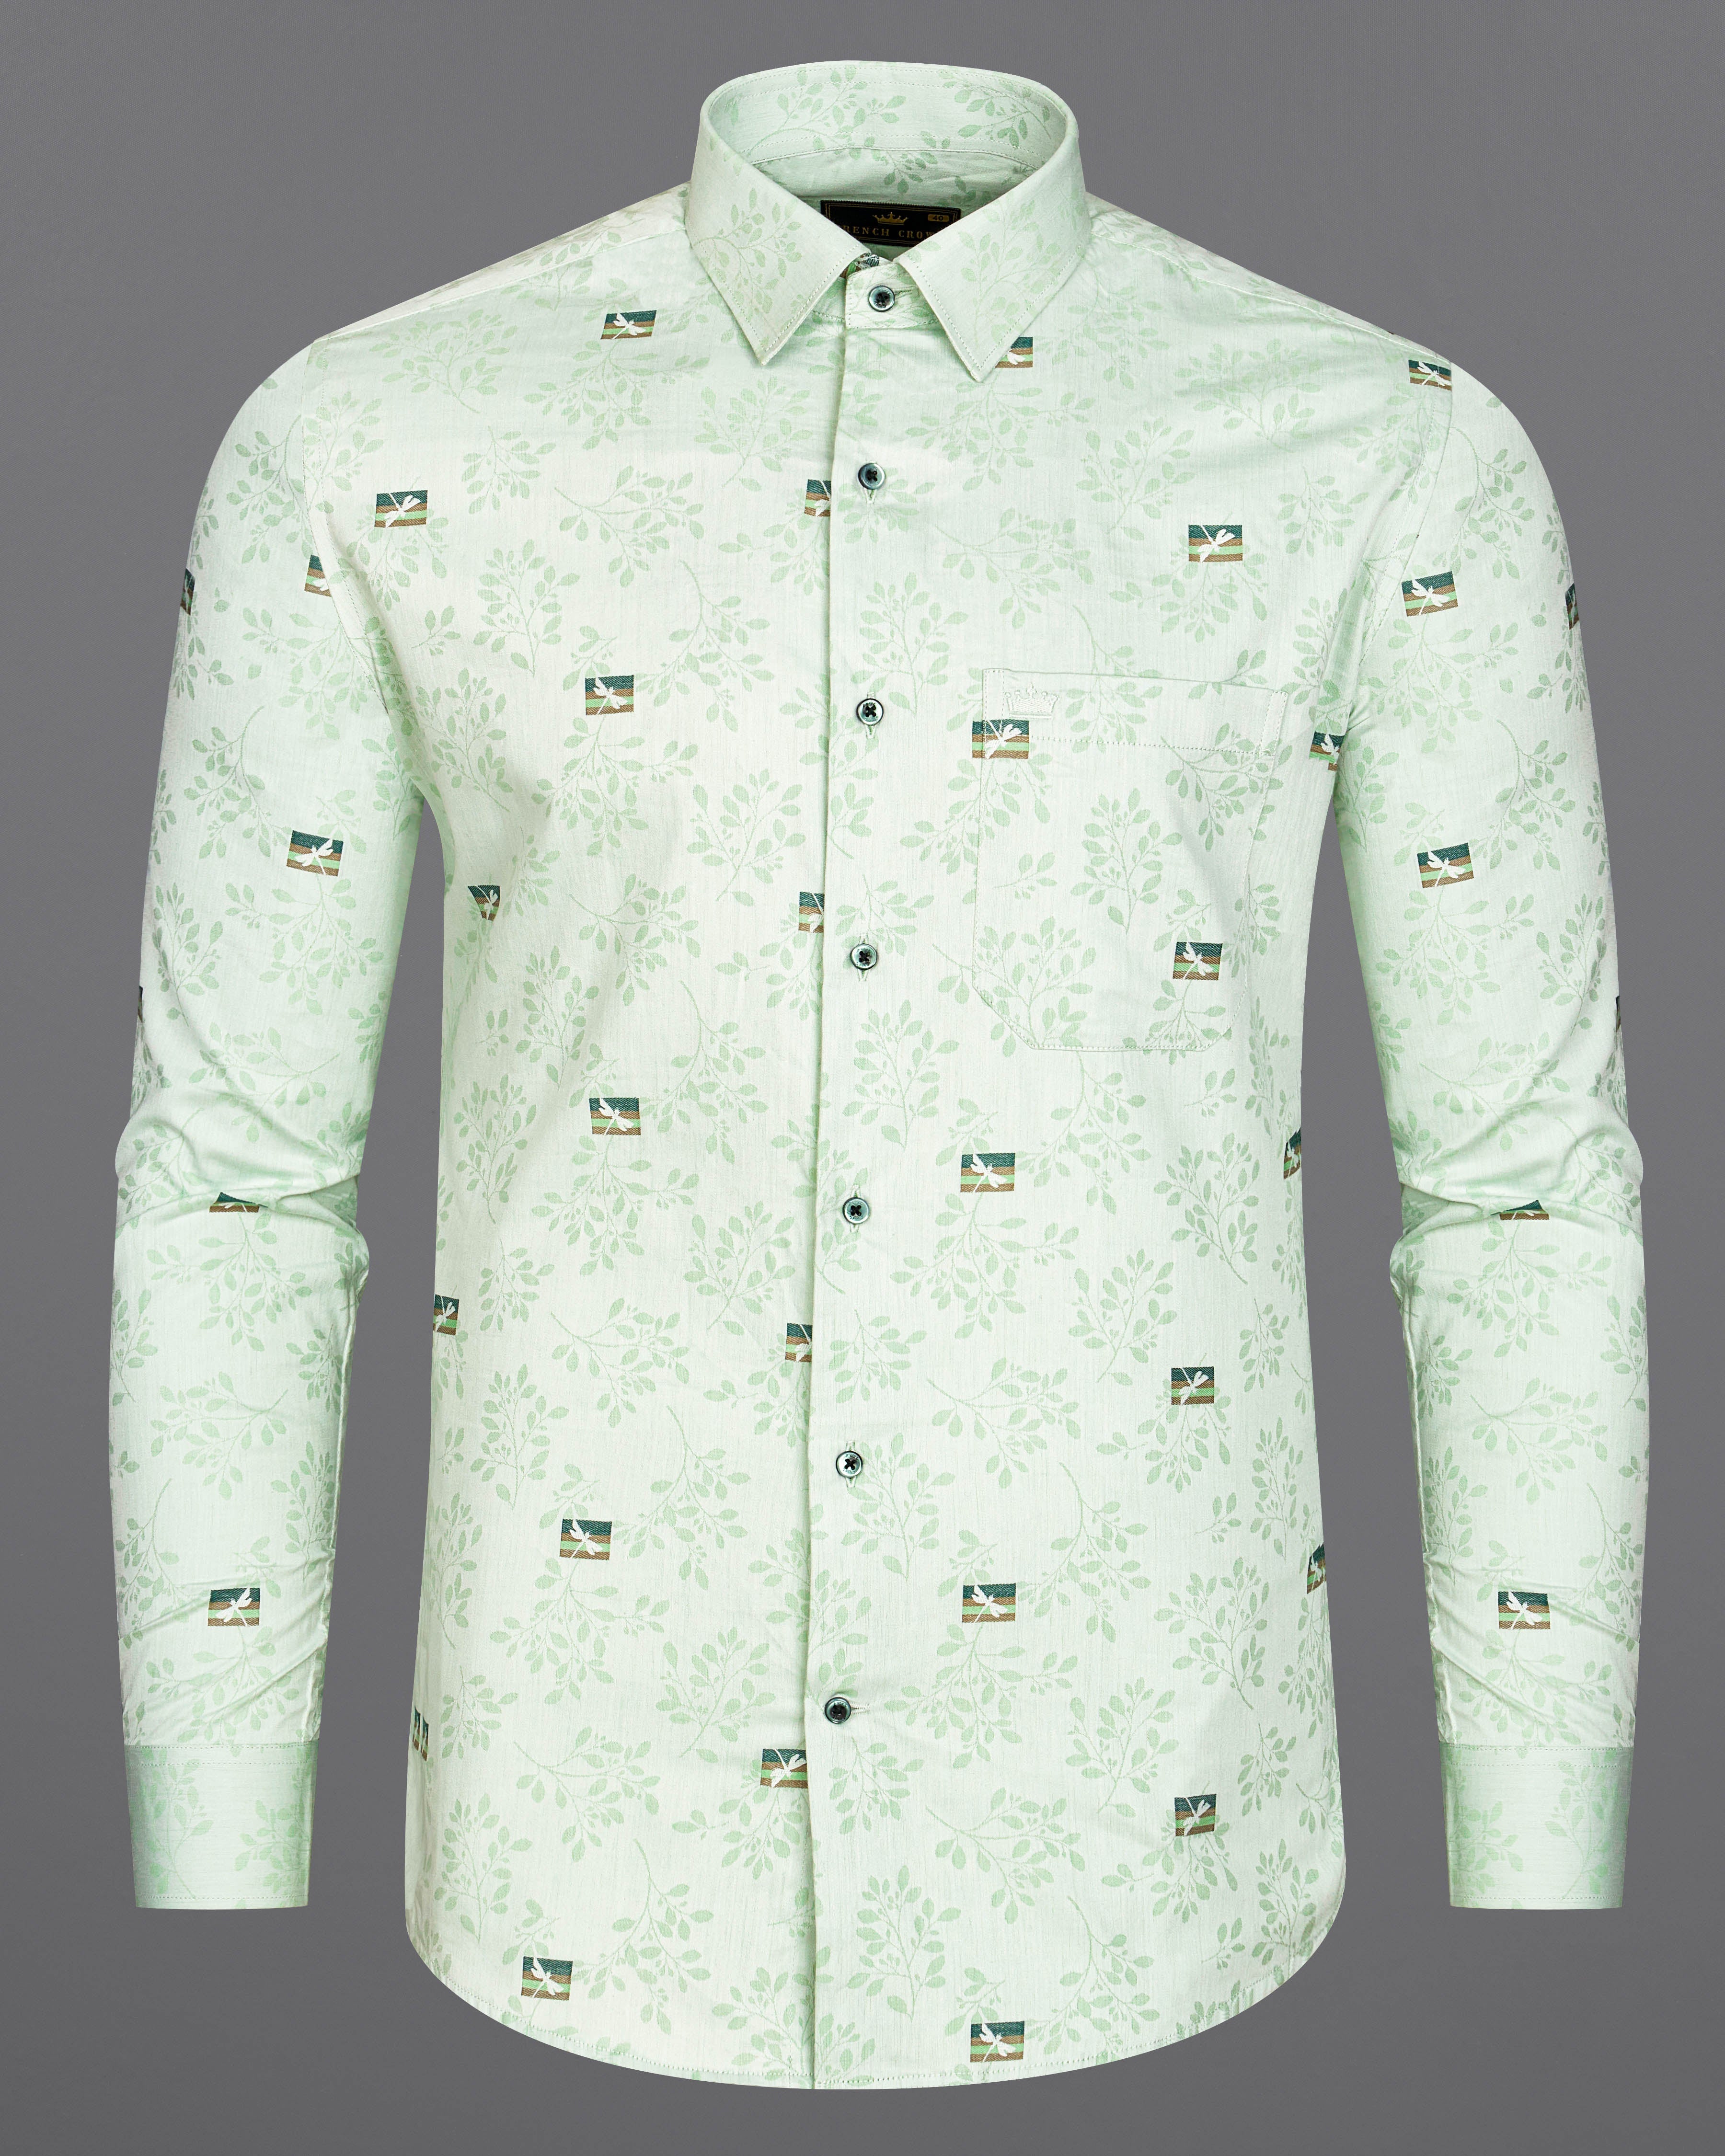 Loafer Green with Jacquard Textured Premium Giza Cotton Designer Shirt